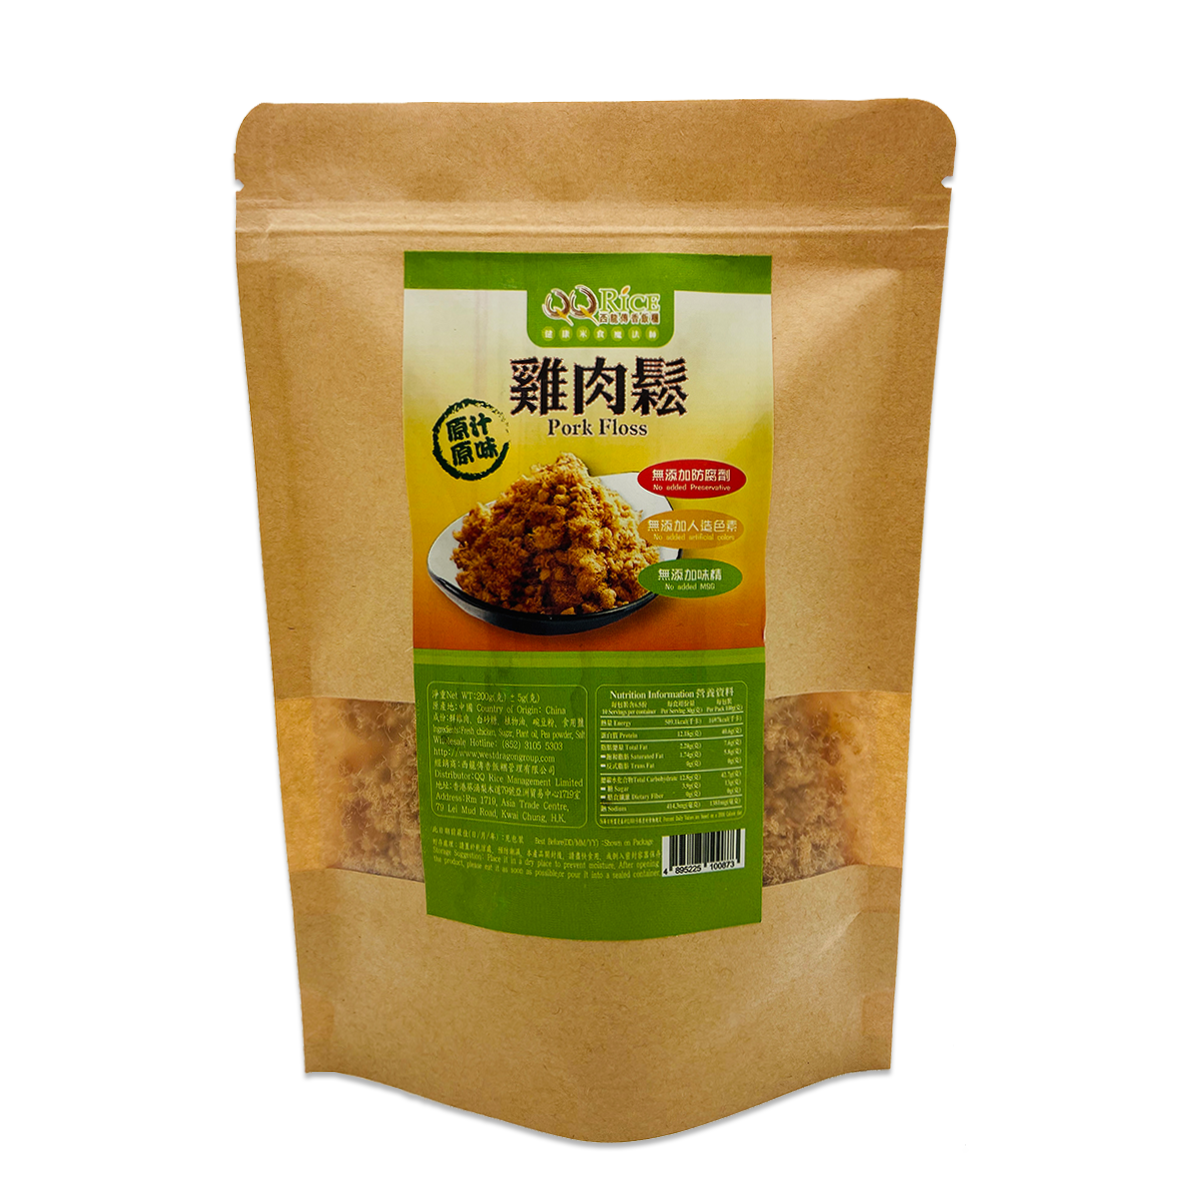 Original Chicken Floss 鸡肉松 – Muar Yuen Chen Siang 麻坡源珍香